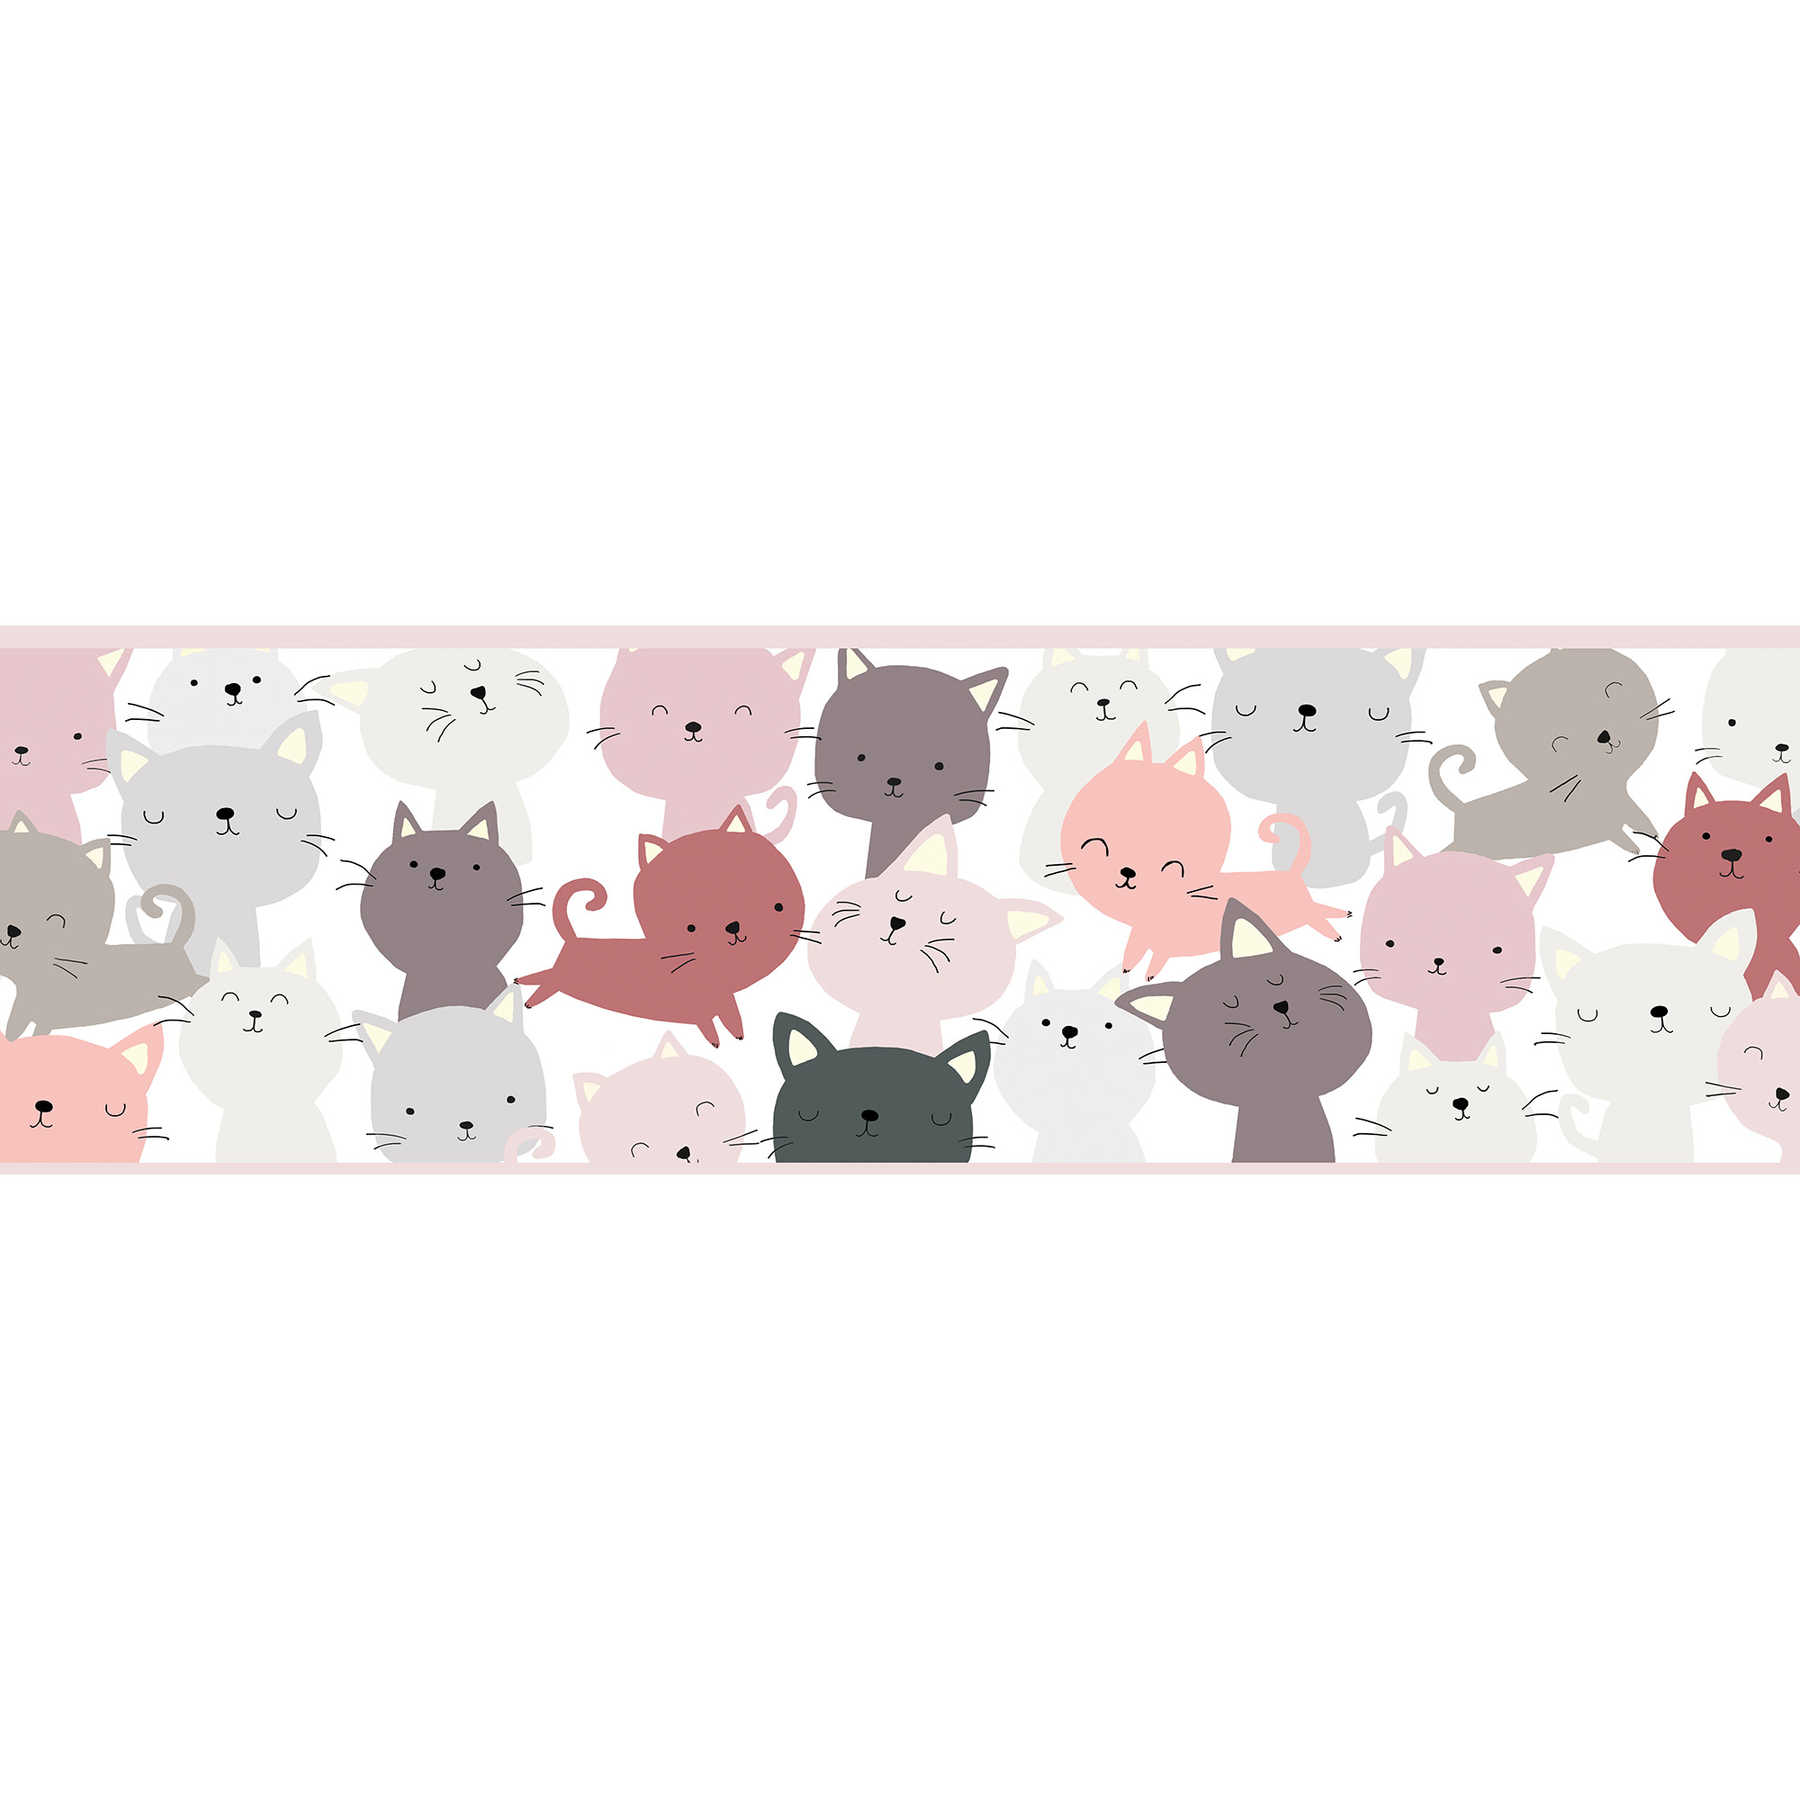 Girls wallpaper, self-adhesive border "Cat friends" - pink, grey, purple
